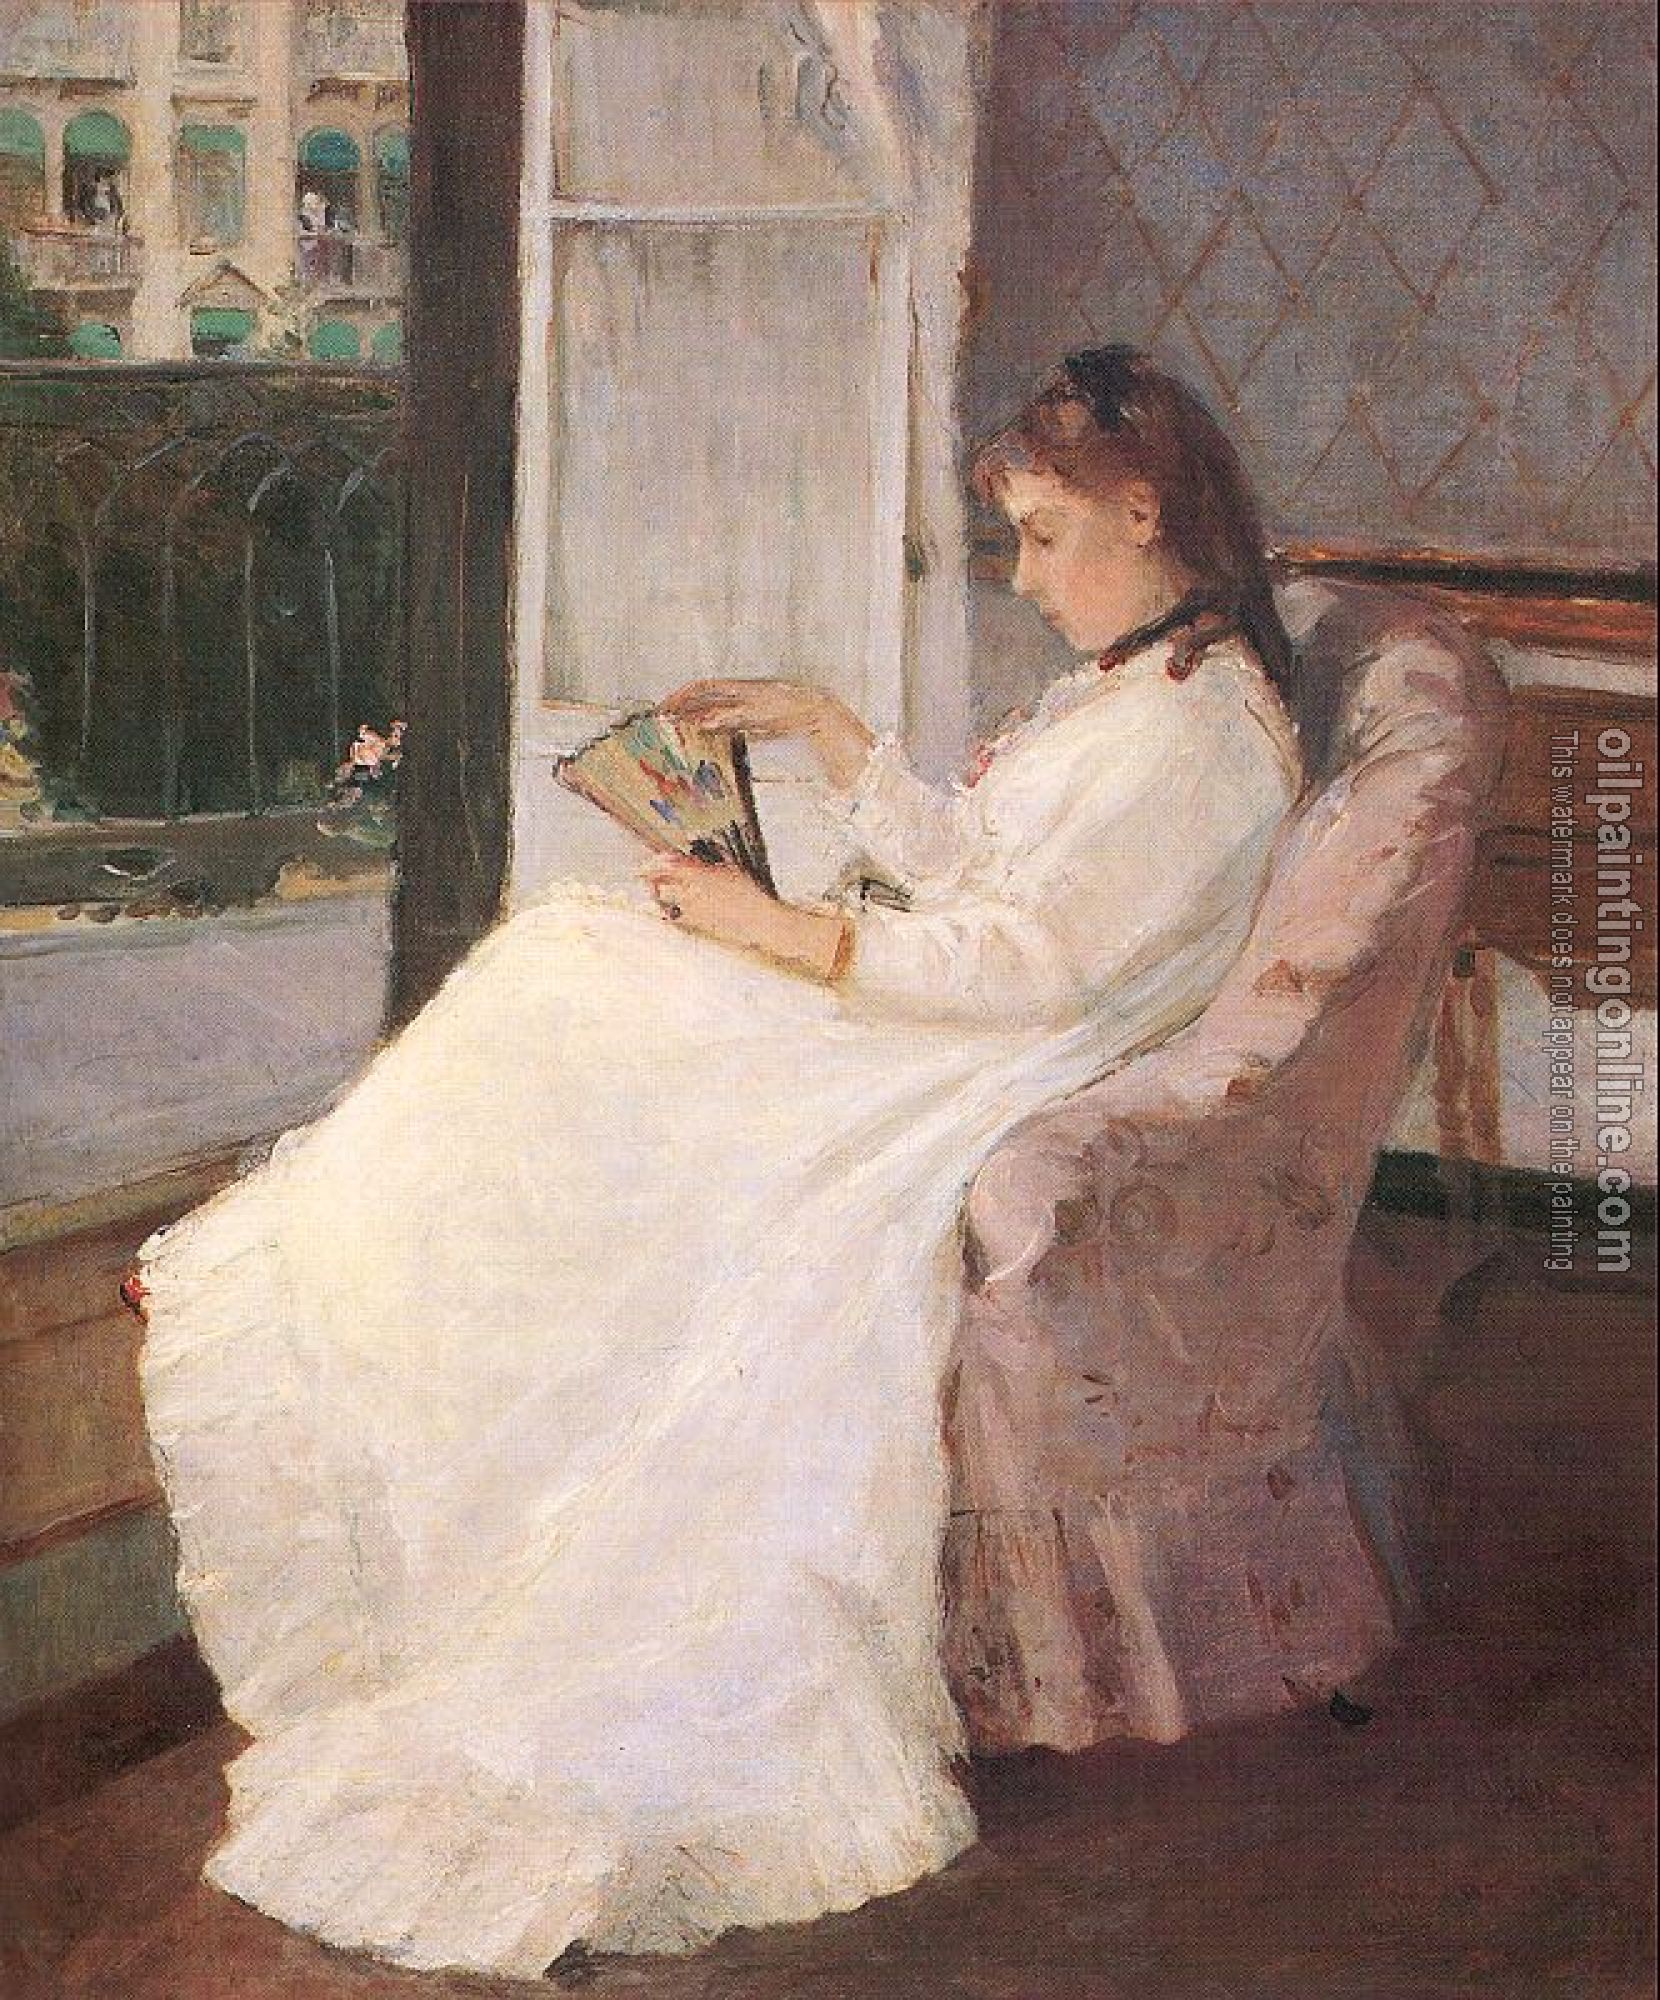 Morisot, Berthe - The Artist's Sister at a Window